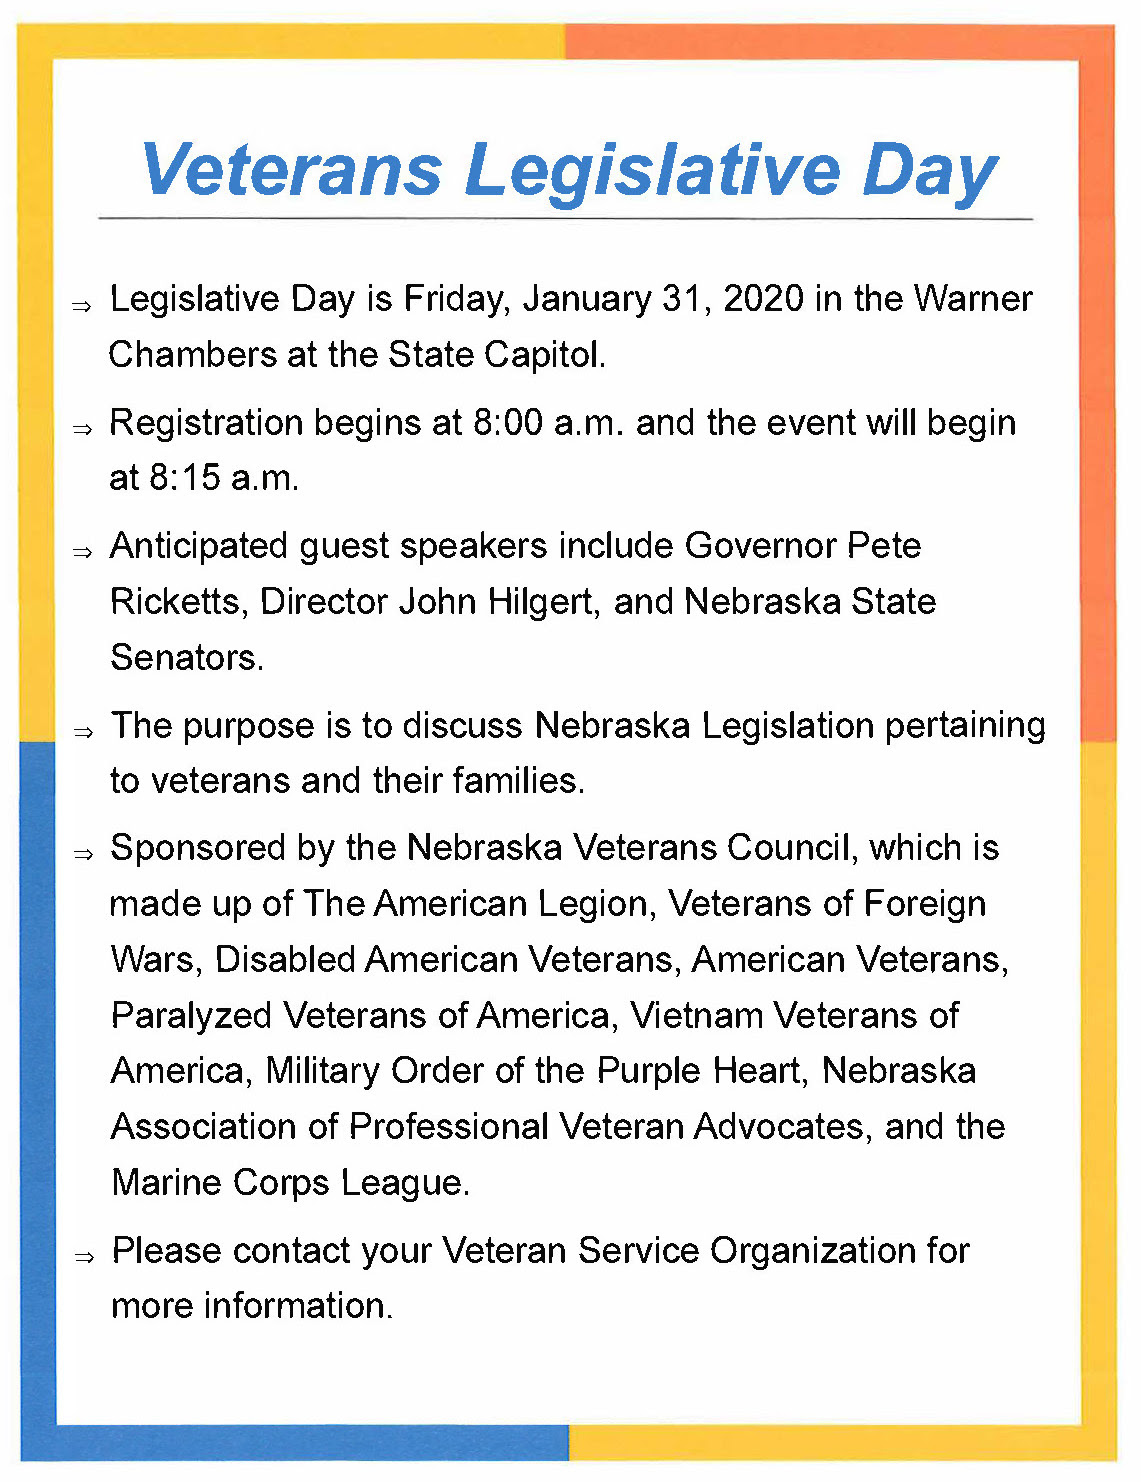 Veterans Legislative Day Flyer